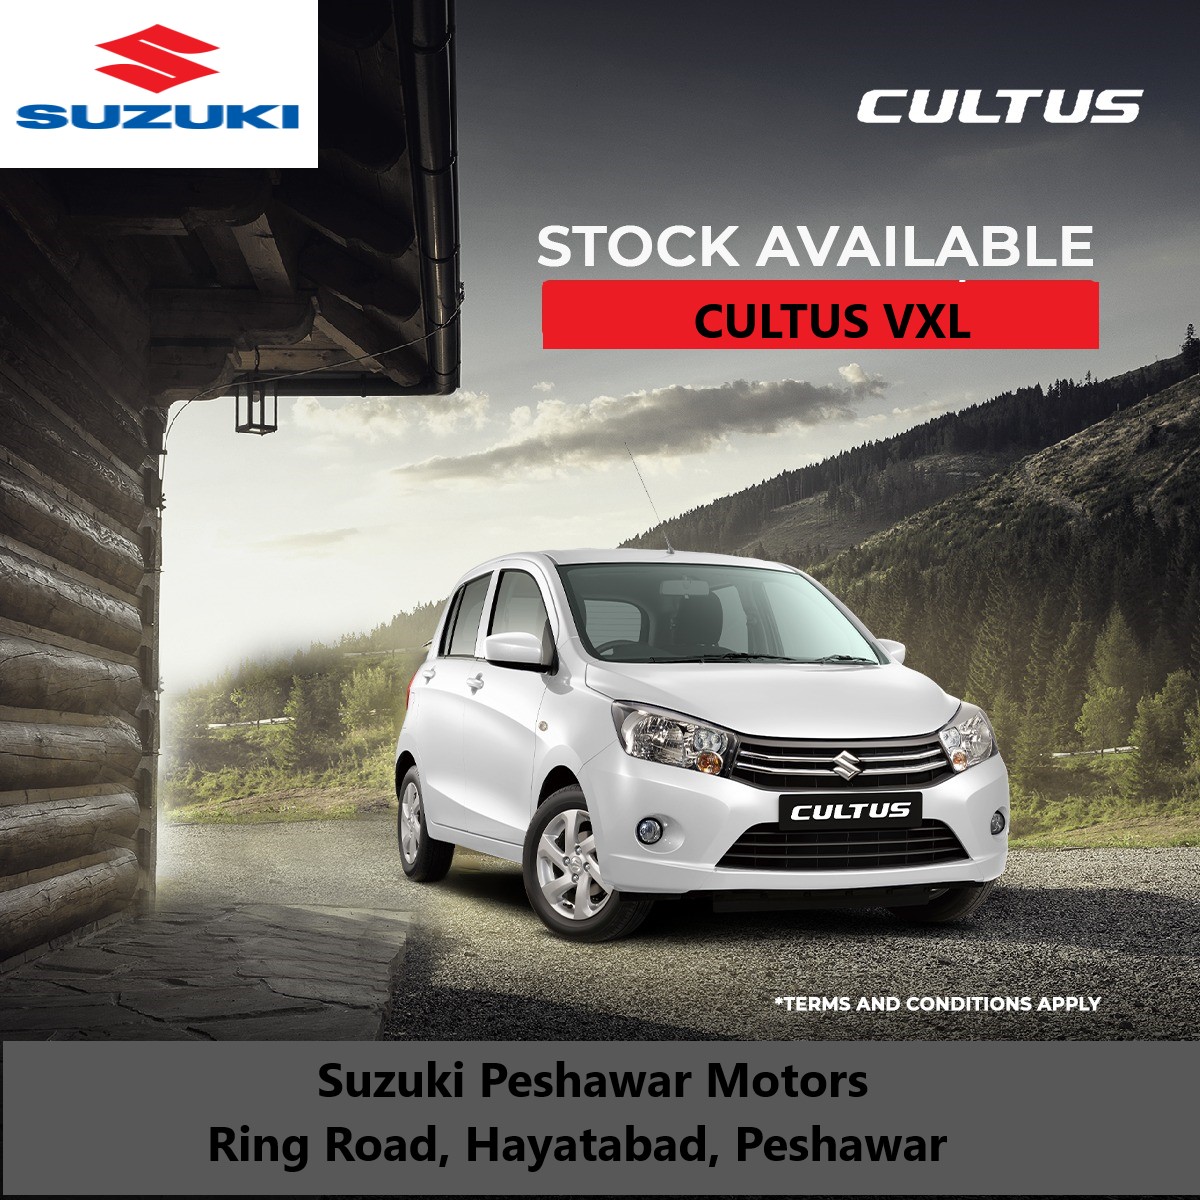 Drive away in style with the Cultus VXL! 
It's in stock and readily available.
Contact us: 091-5231166-77-88
#HappyCustomer #SuzukiPakistan #Suzuki
#suzukipeshawar #suzuki #swift #comfort #safedrive #safety #carcareservices #SuzukiPakistan #carlife #carservicing #Suzukiravi